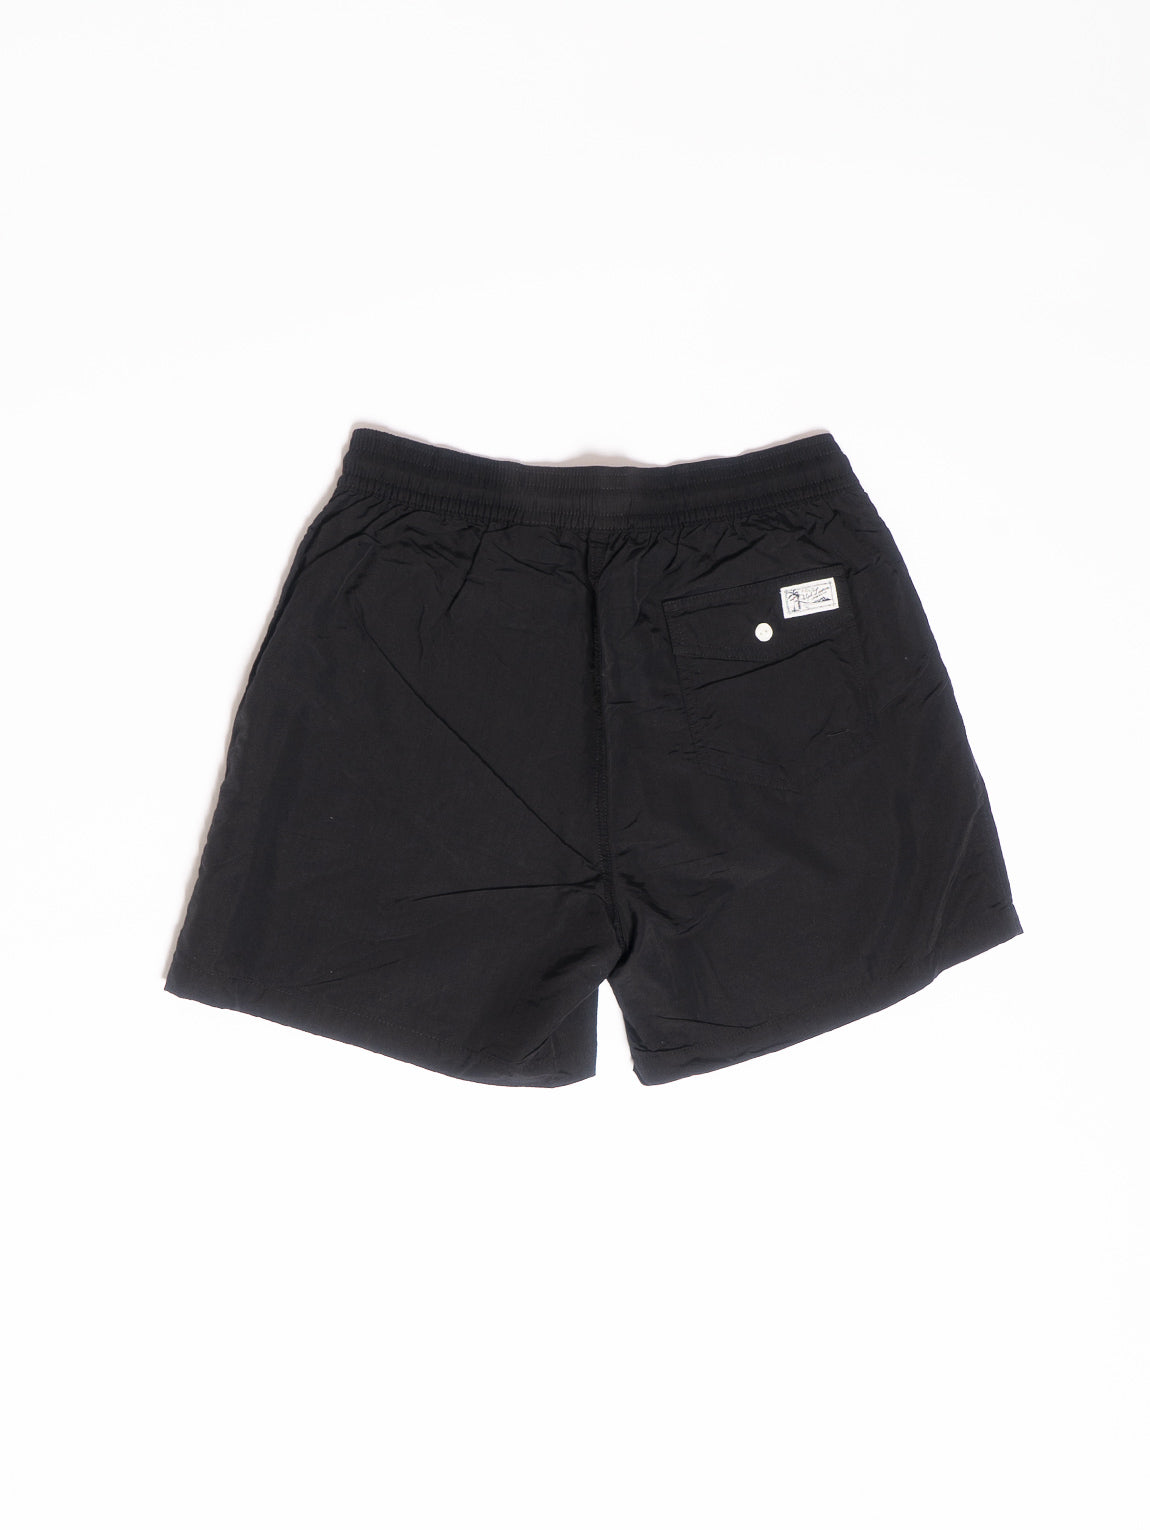 Black swim shorts